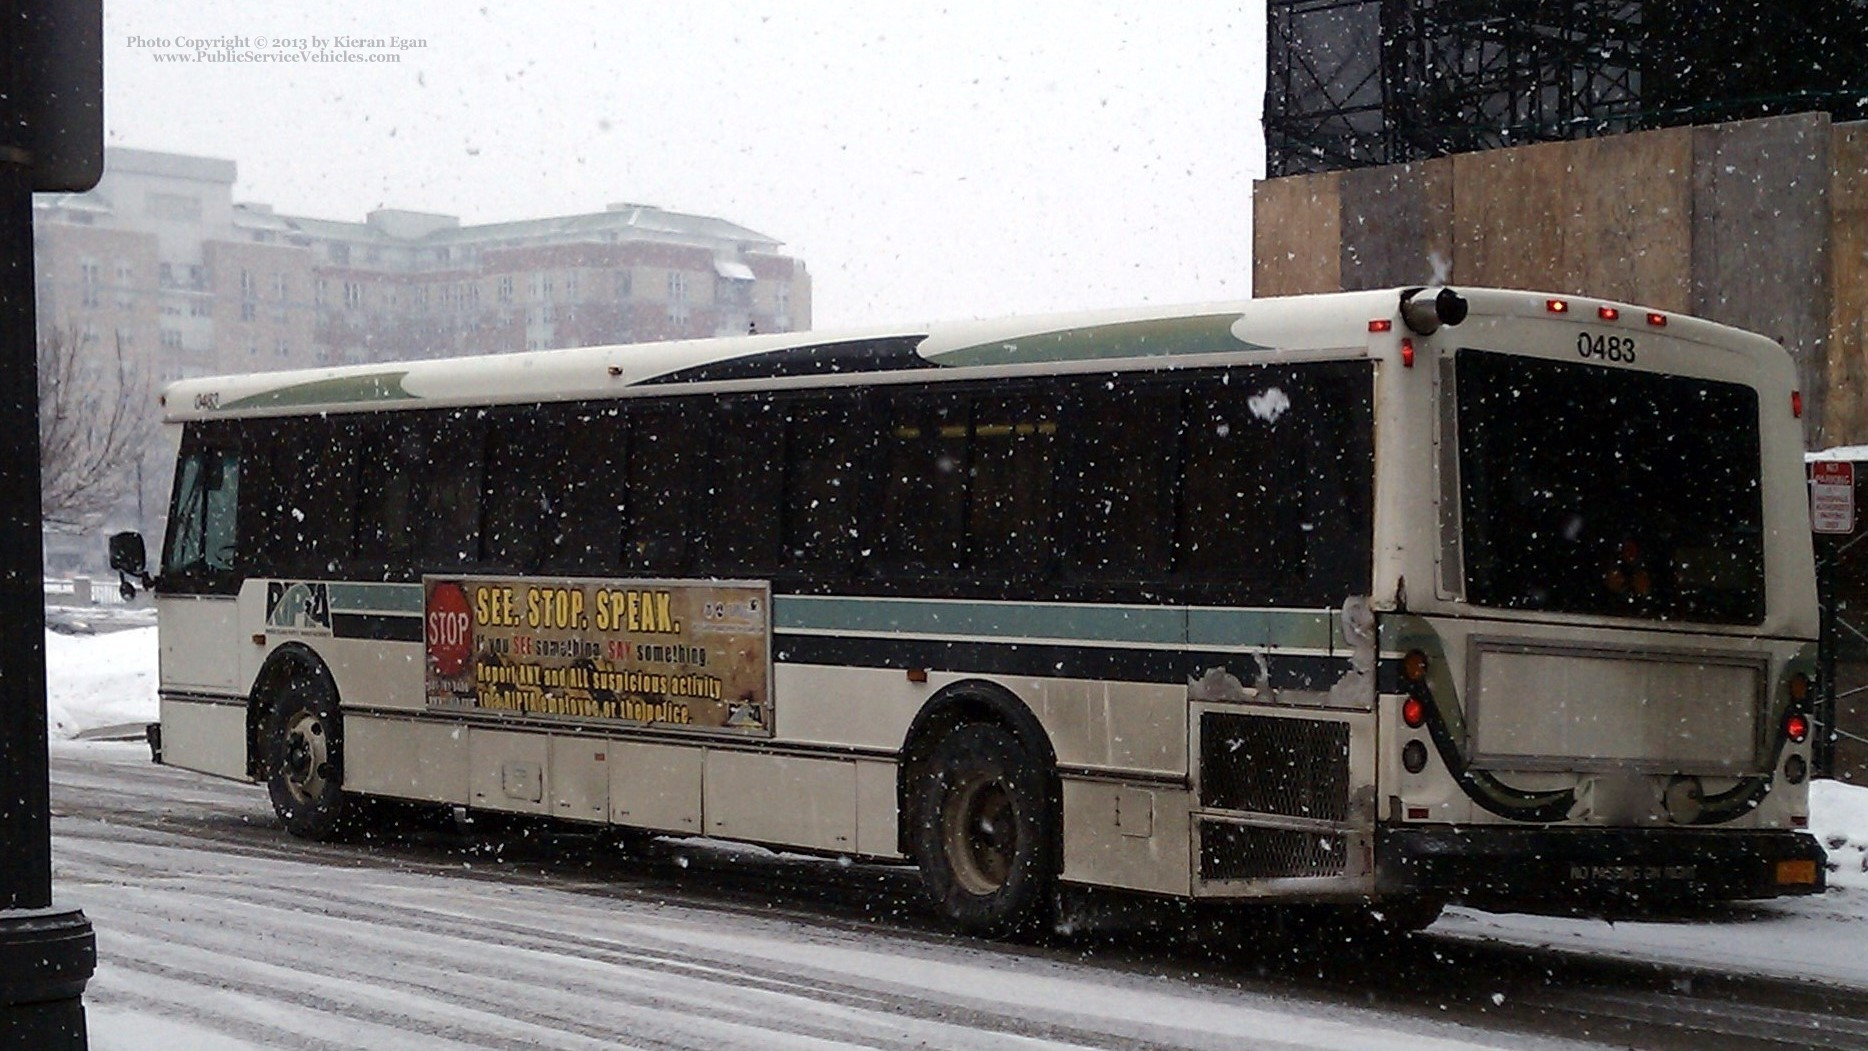 A photo  of Rhode Island Public Transit Authority
            Bus 0483, a 2004 Orion V 05.501             taken by Kieran Egan